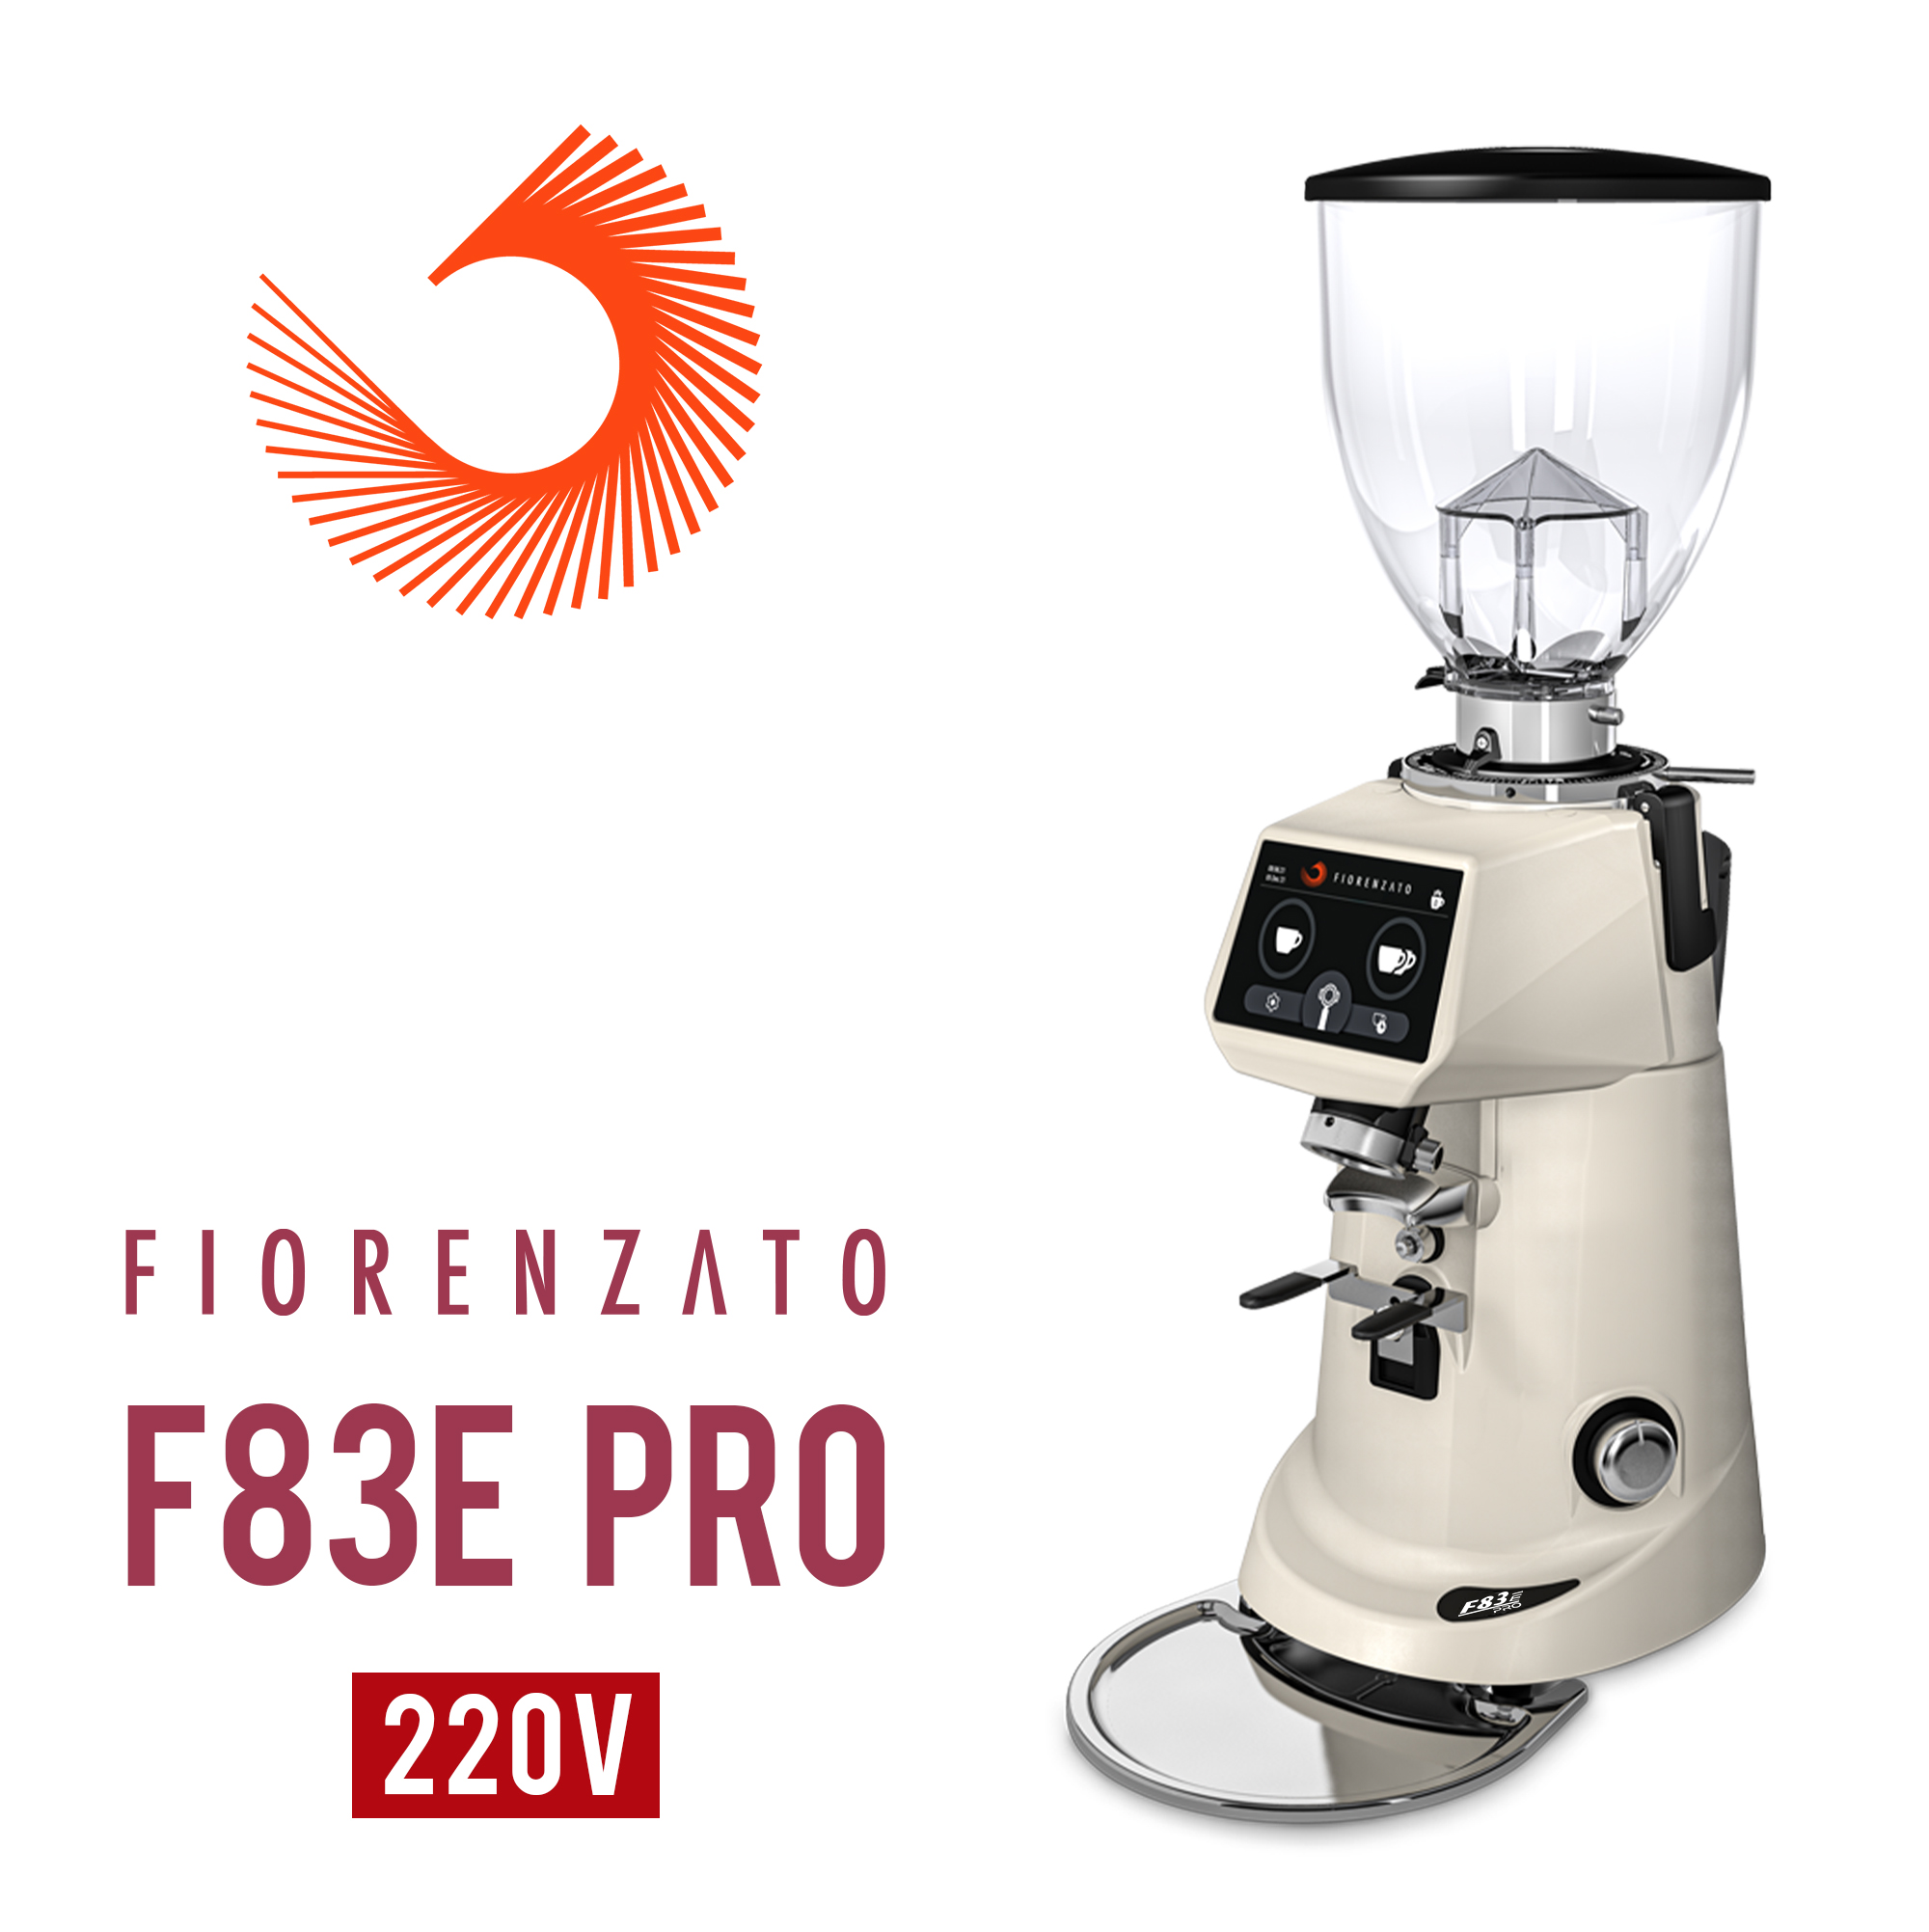 Fiorenzato F83E PRO 營業用磨豆機220V 珍珠白  |營業級磨豆機